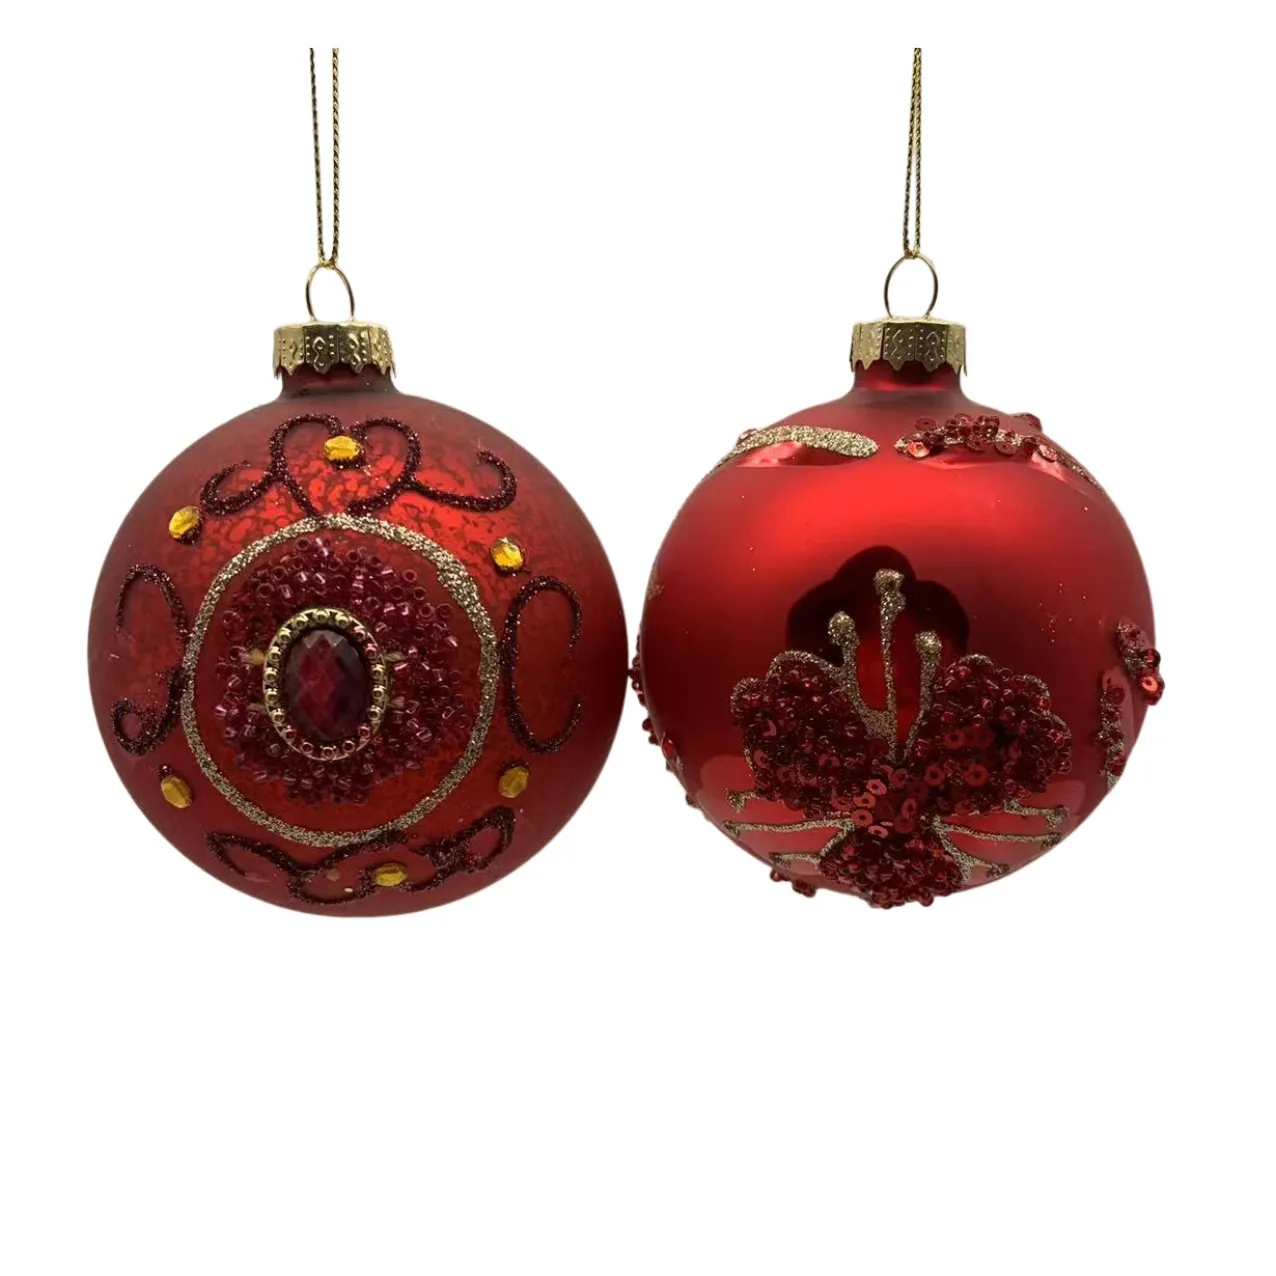 Christmas tree decoration pendant ornament red glass ball